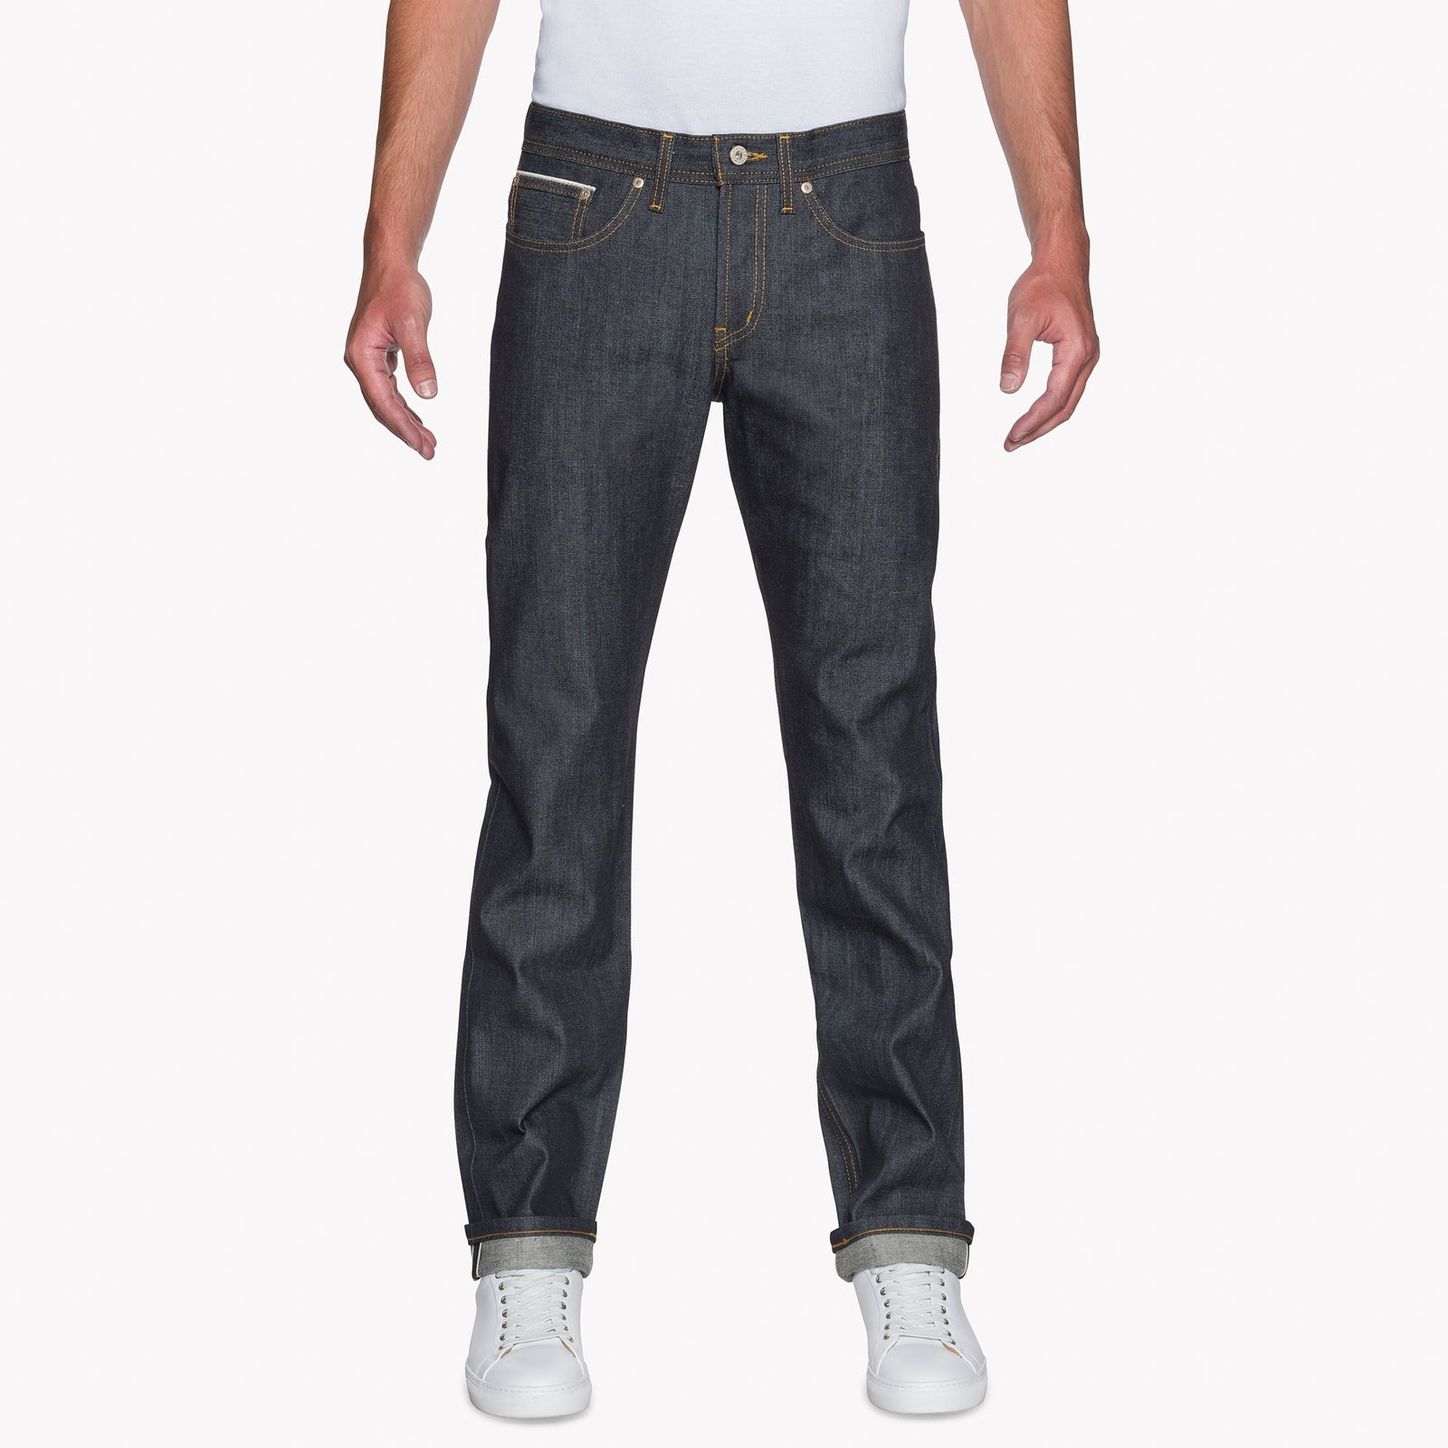 Wrangler Athletic Fit Premium Quality Mens Size 40x30 Dark Wash Denim Jeans  | eBay